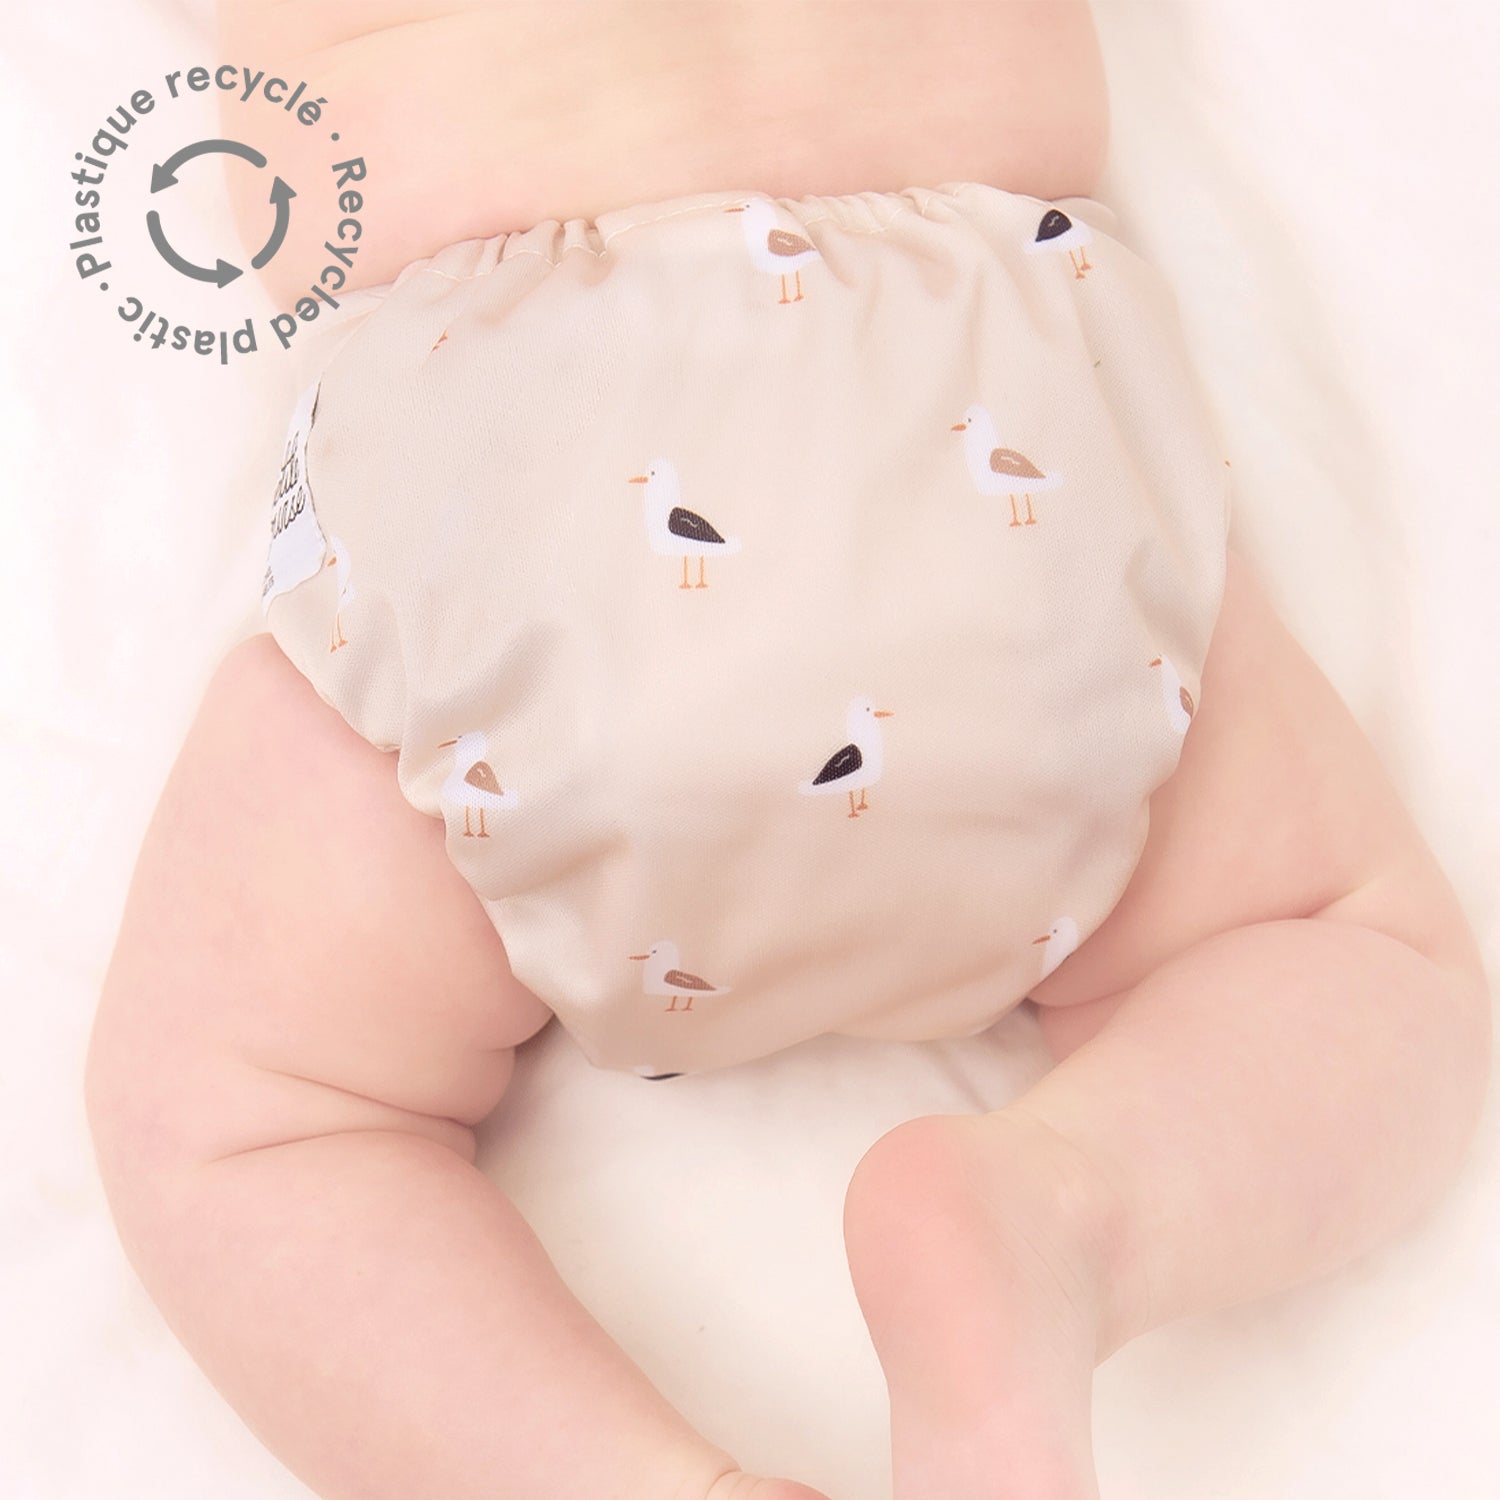 Diapers - Newborn & Baby Diapers